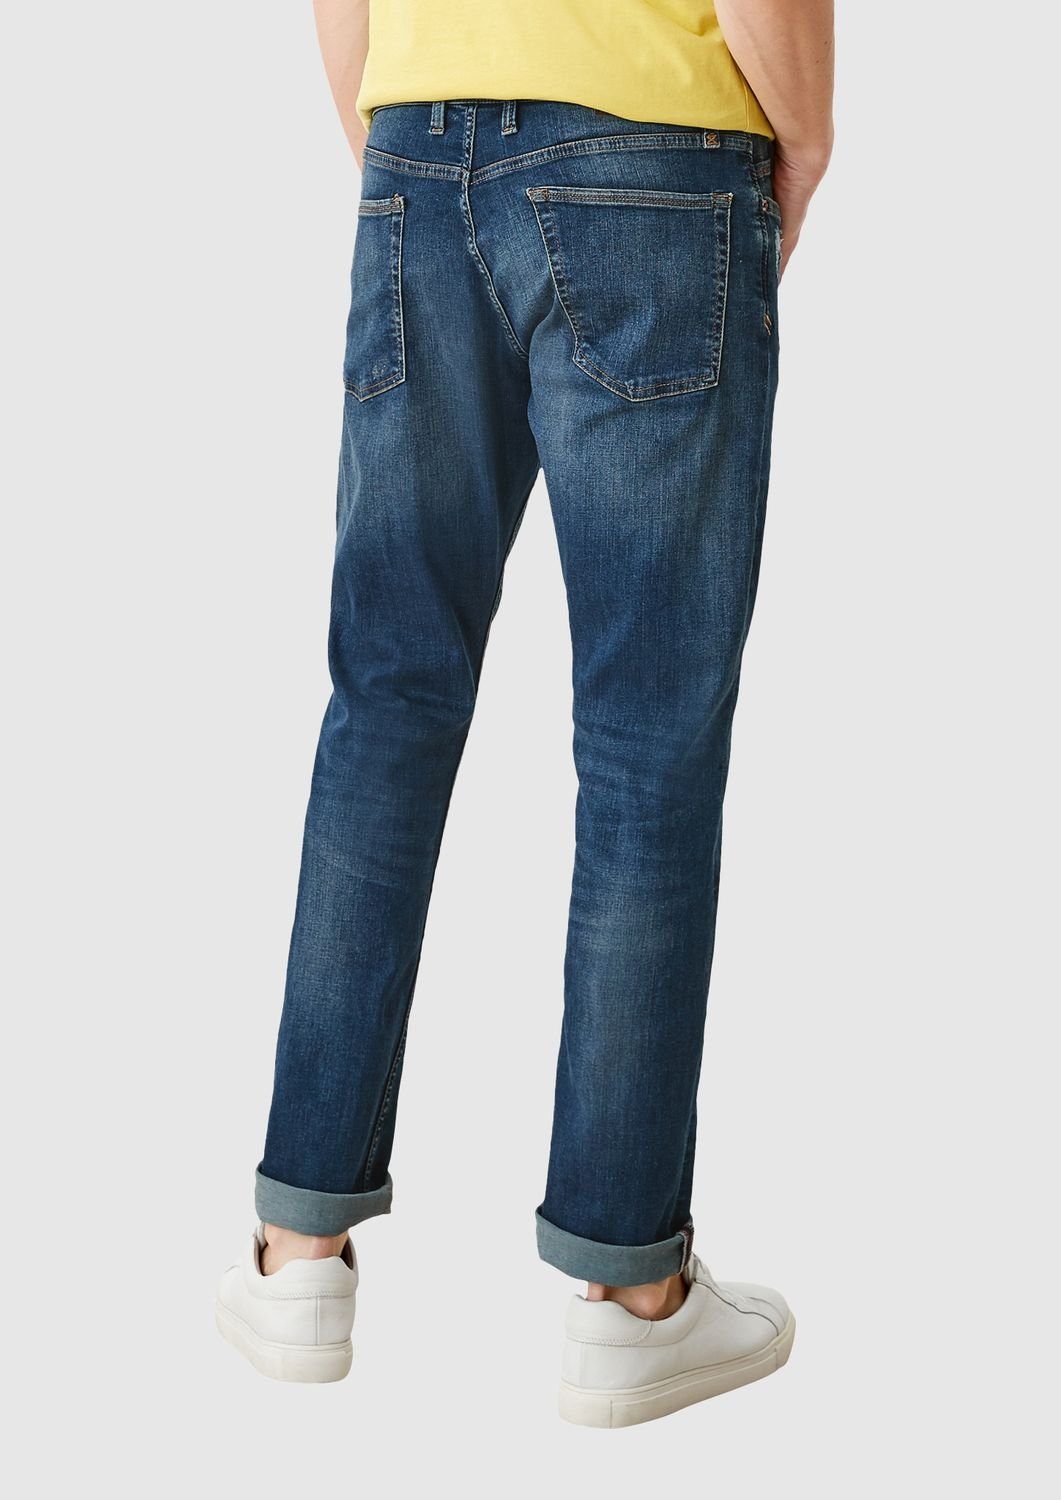 s.Oliver Slim-fit-Jeans KEITH Slim Fit, Beinverlauf: Straight Medium rise, Leg Blau Bundhöhe